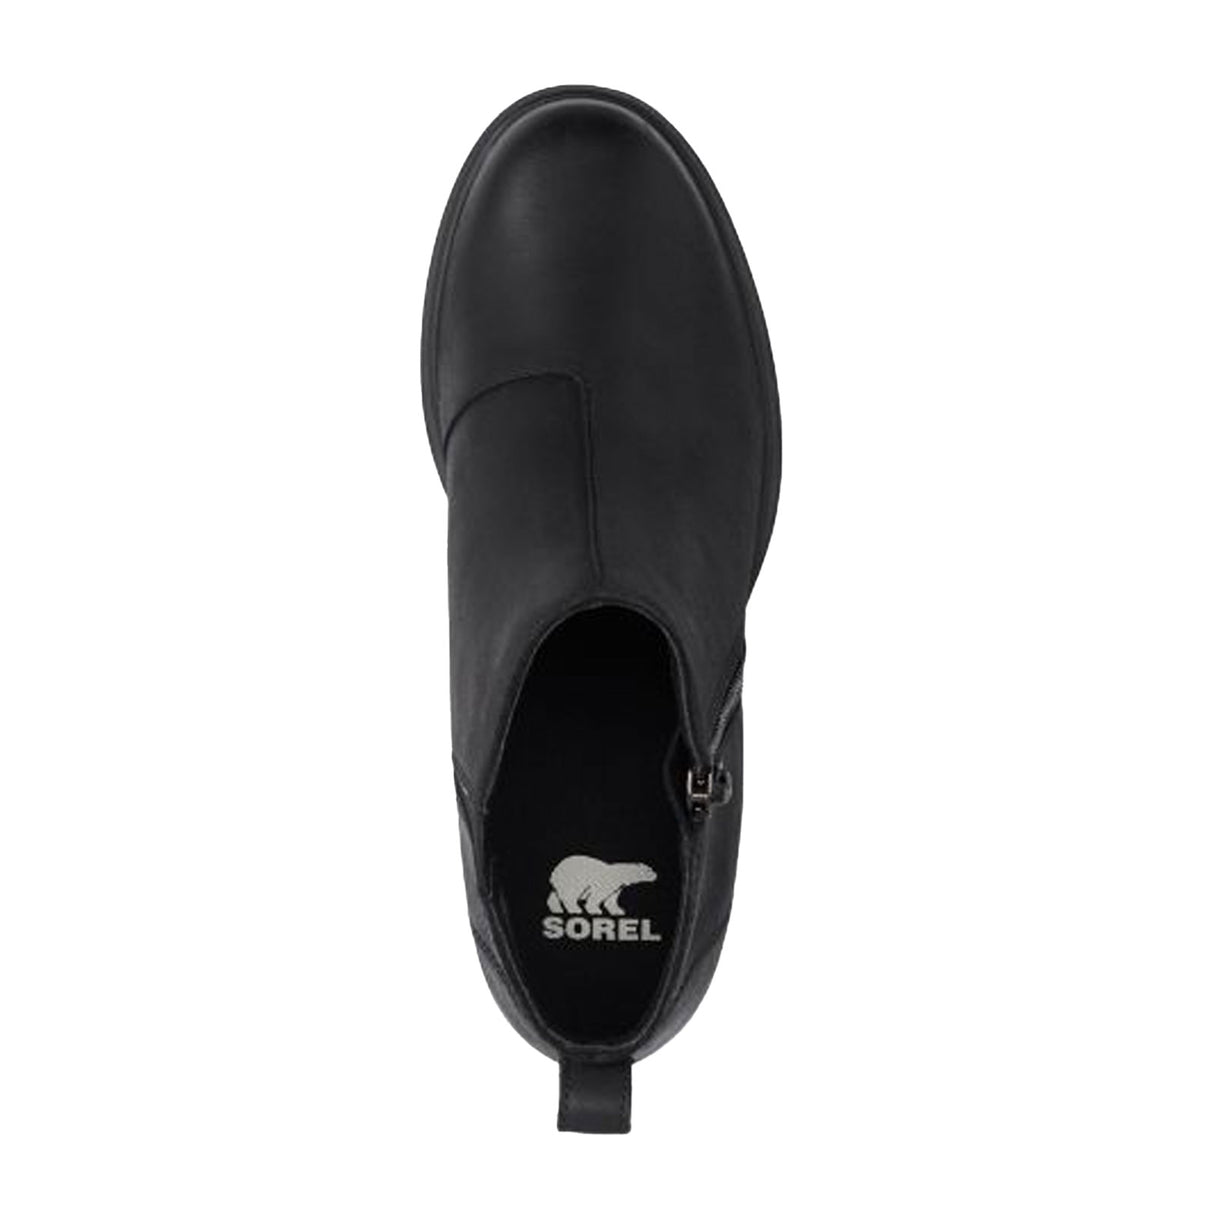 Sorel Evie II Zip Wedge Ankle Boot (Women) - Black Boots - Fashion - Wedge - The Heel Shoe Fitters